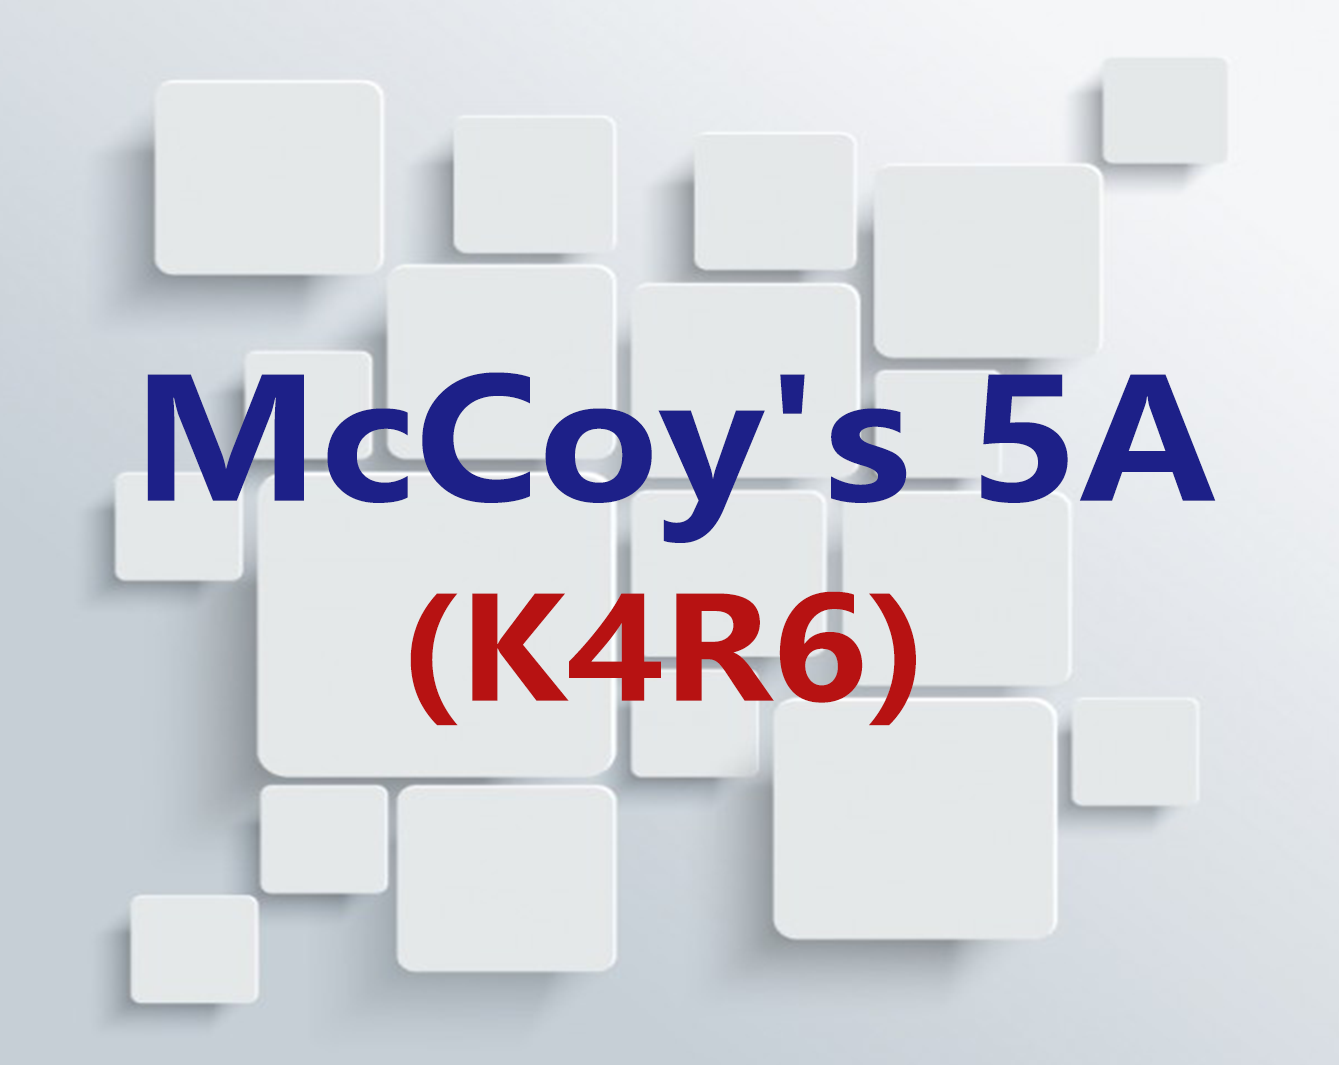 McCoy's 5A SILAC Medium (K4R6) 